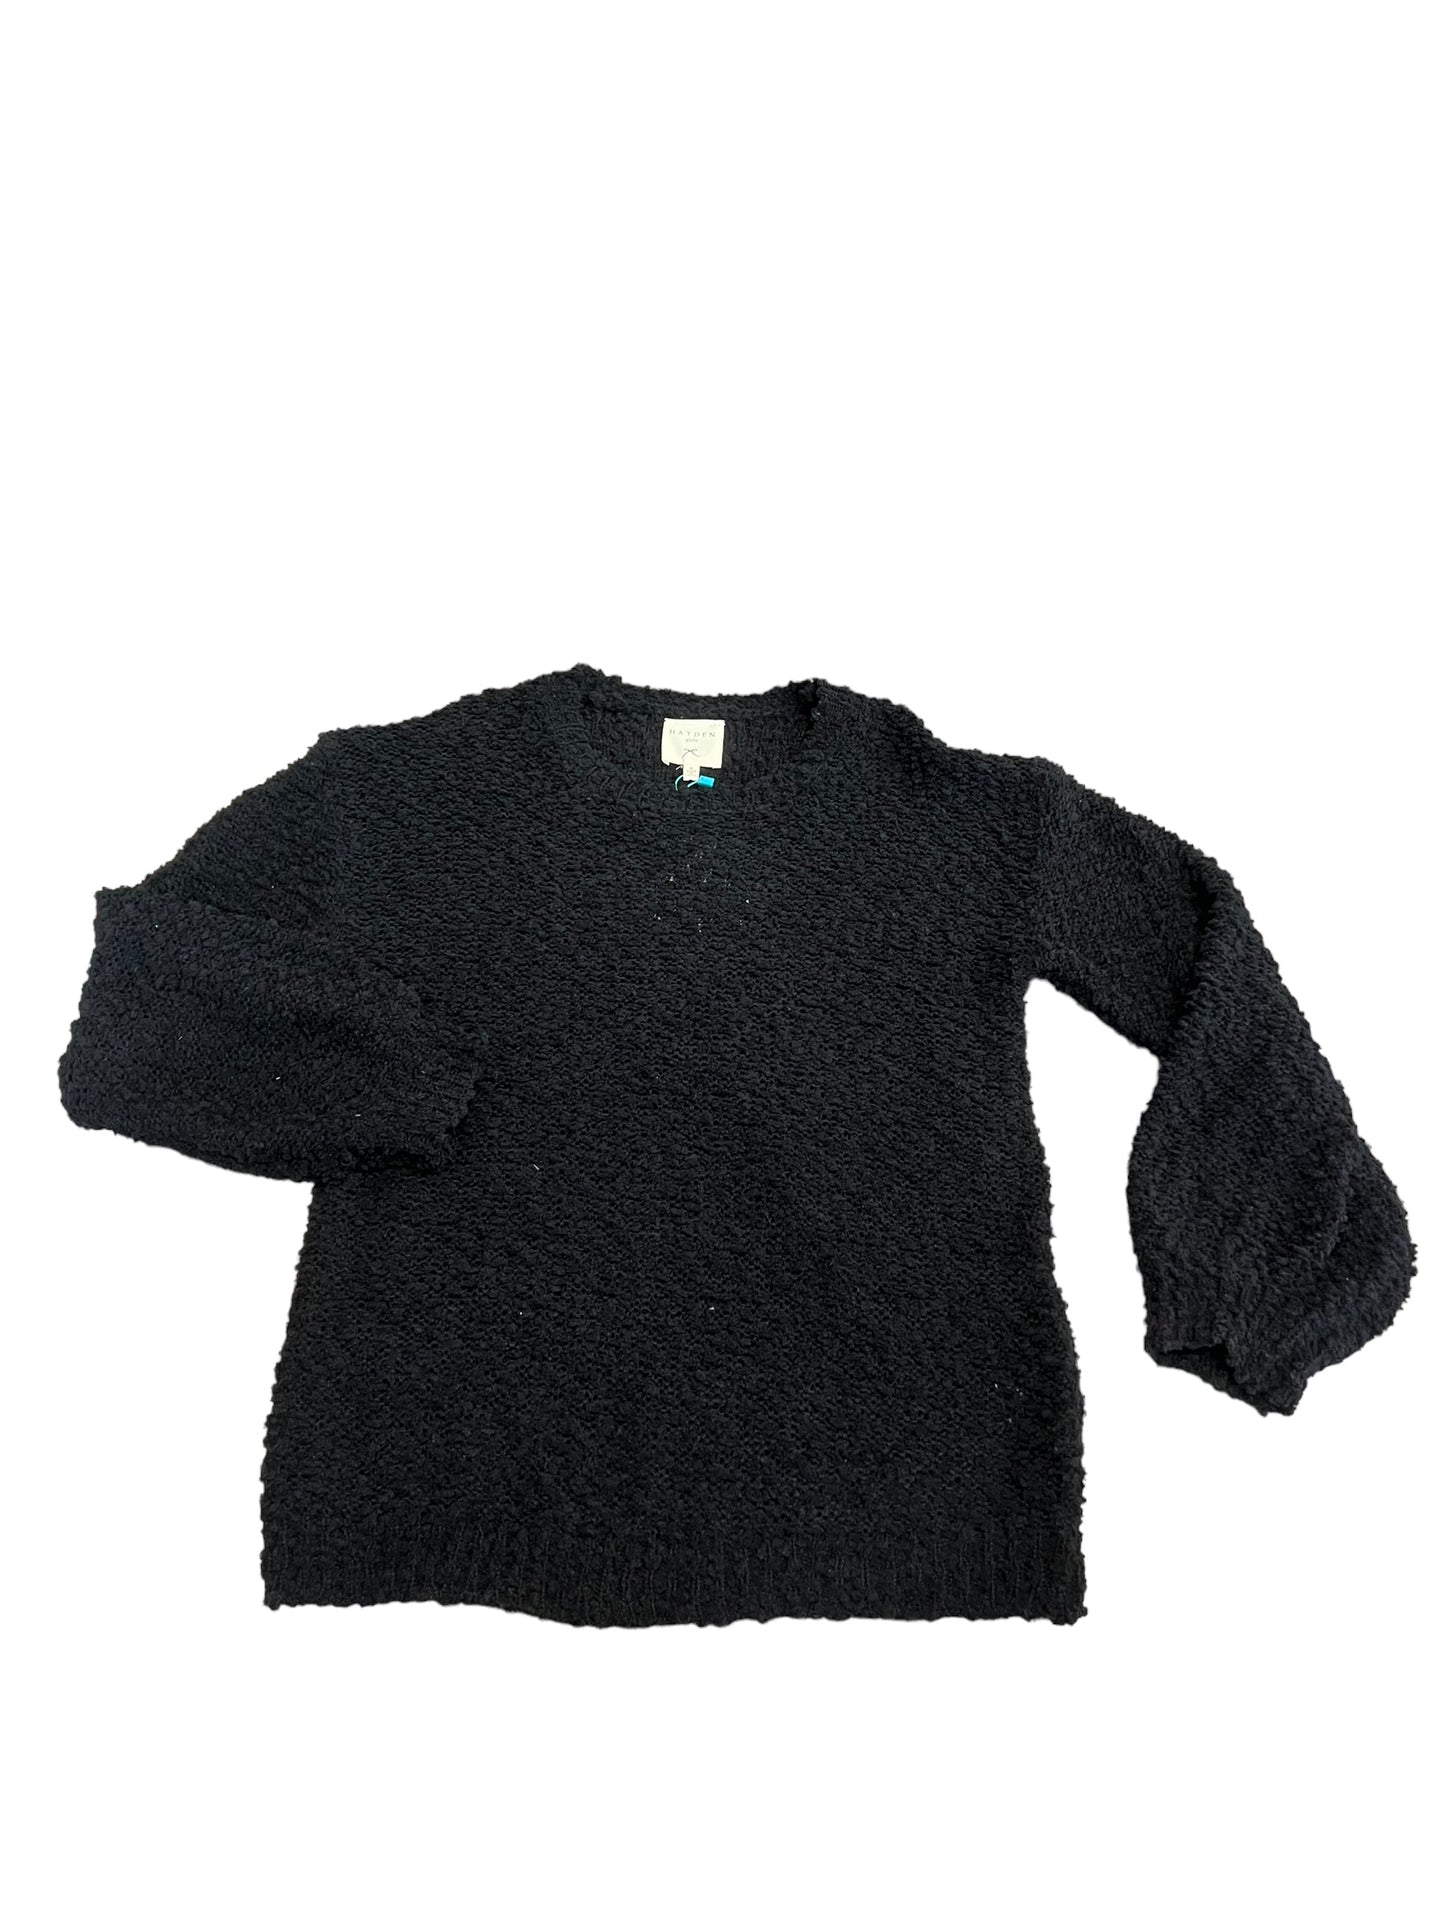 Black popcorn sweater